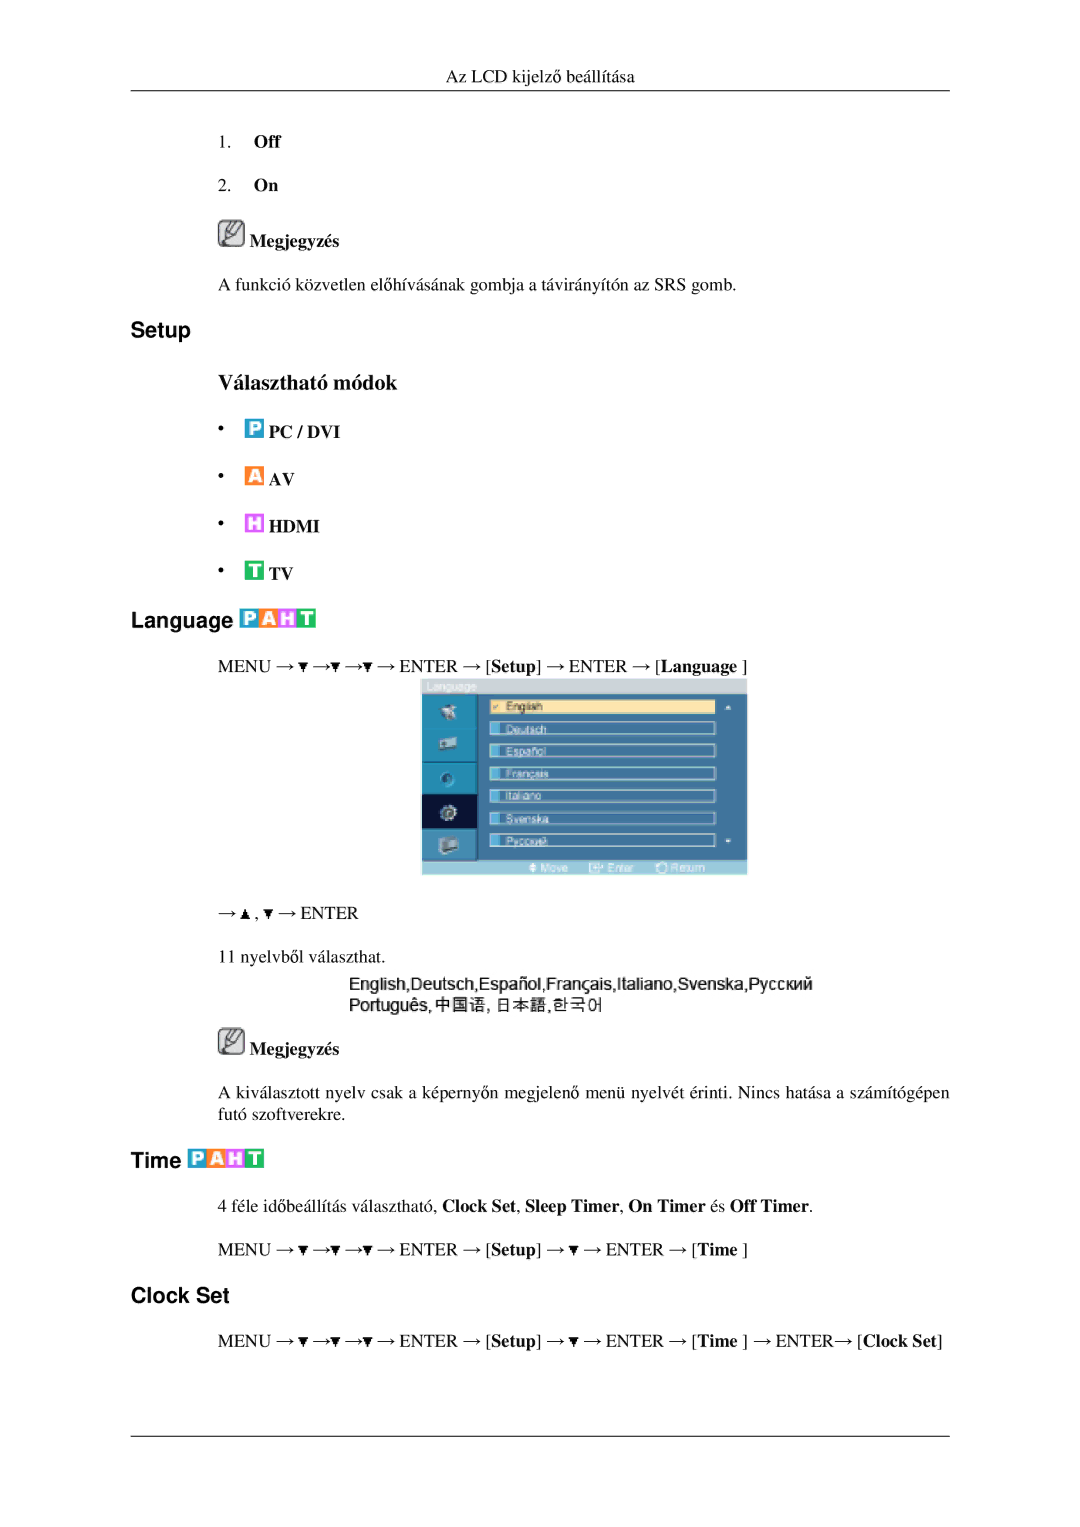 Samsung LH46MGPLGD/EN manual Setup, Language, Time, Clock Set, Off Megjegyzés 